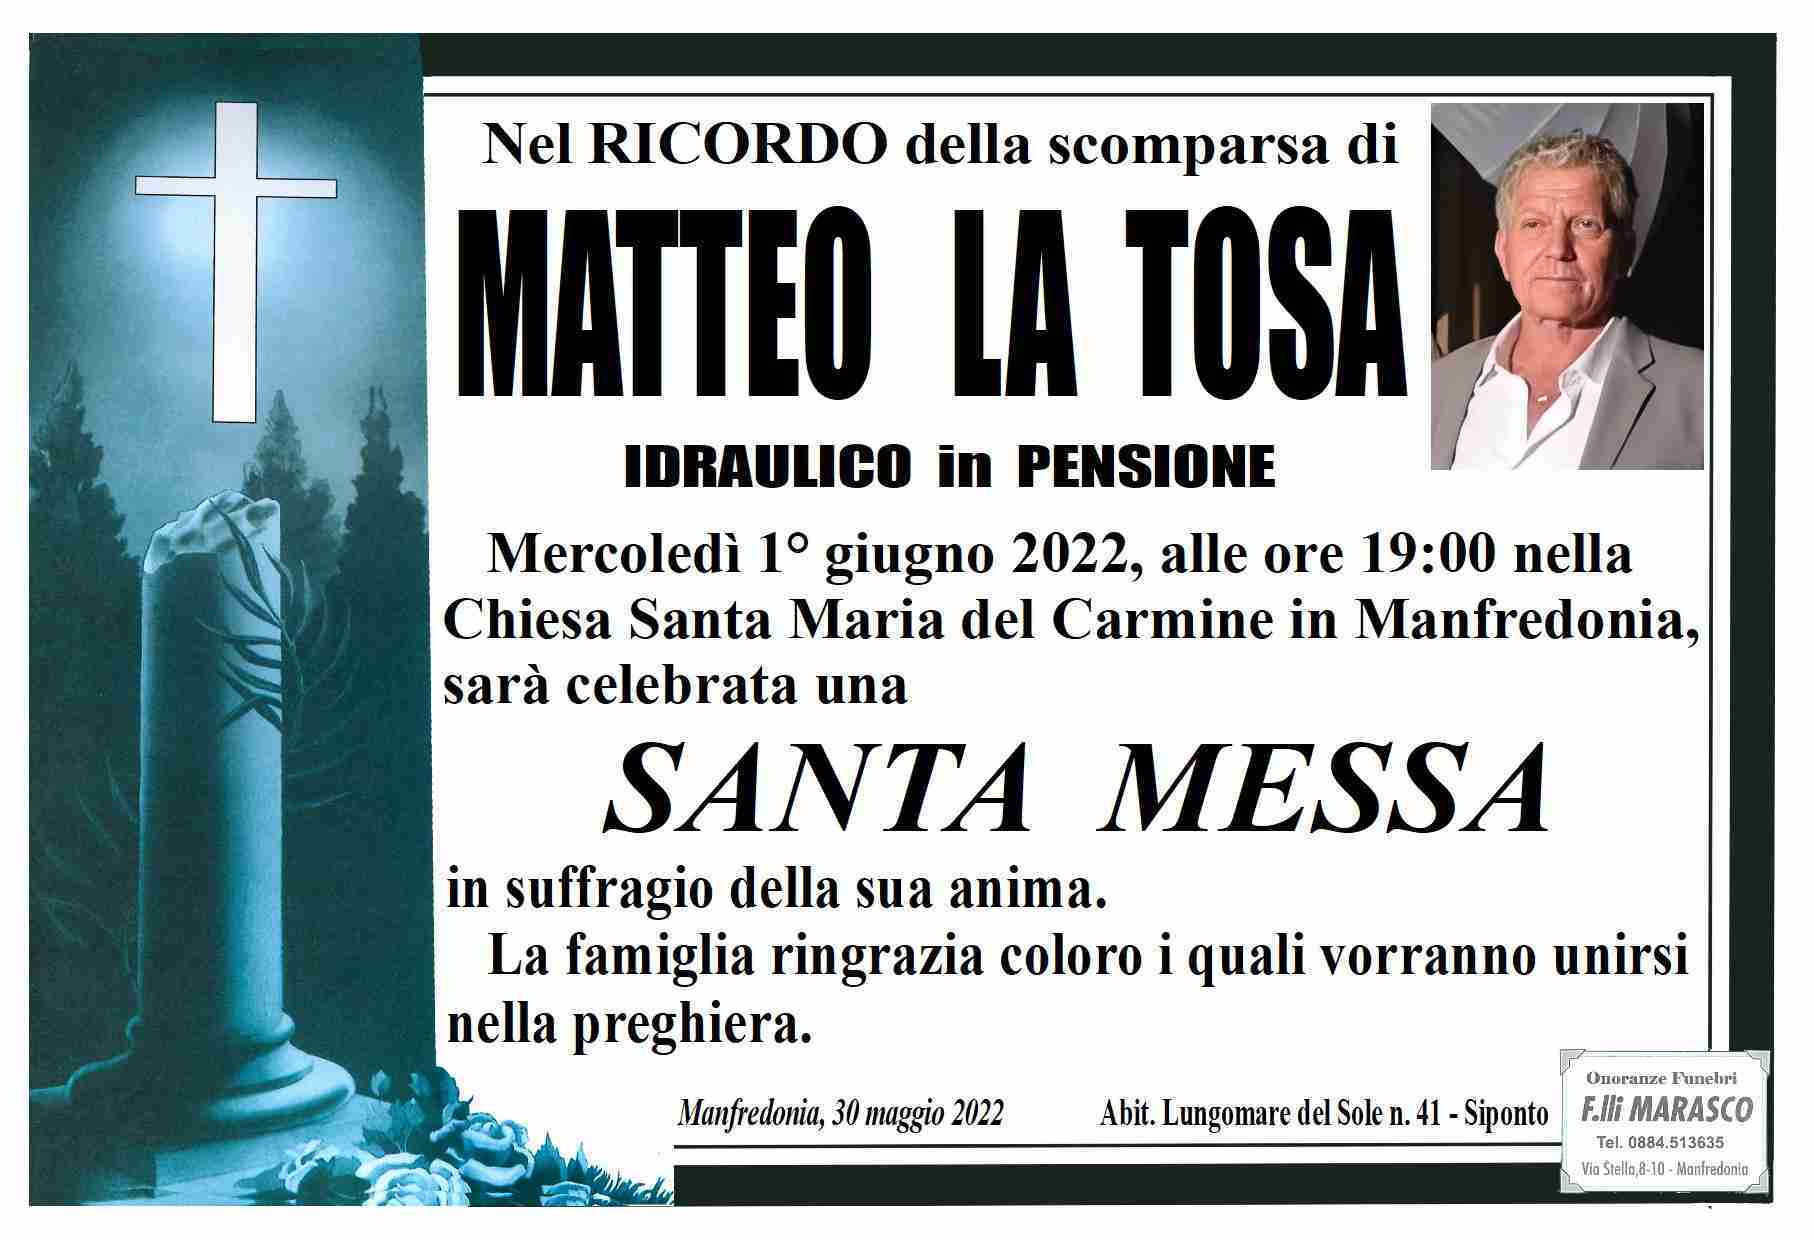 Matteo La Tosa